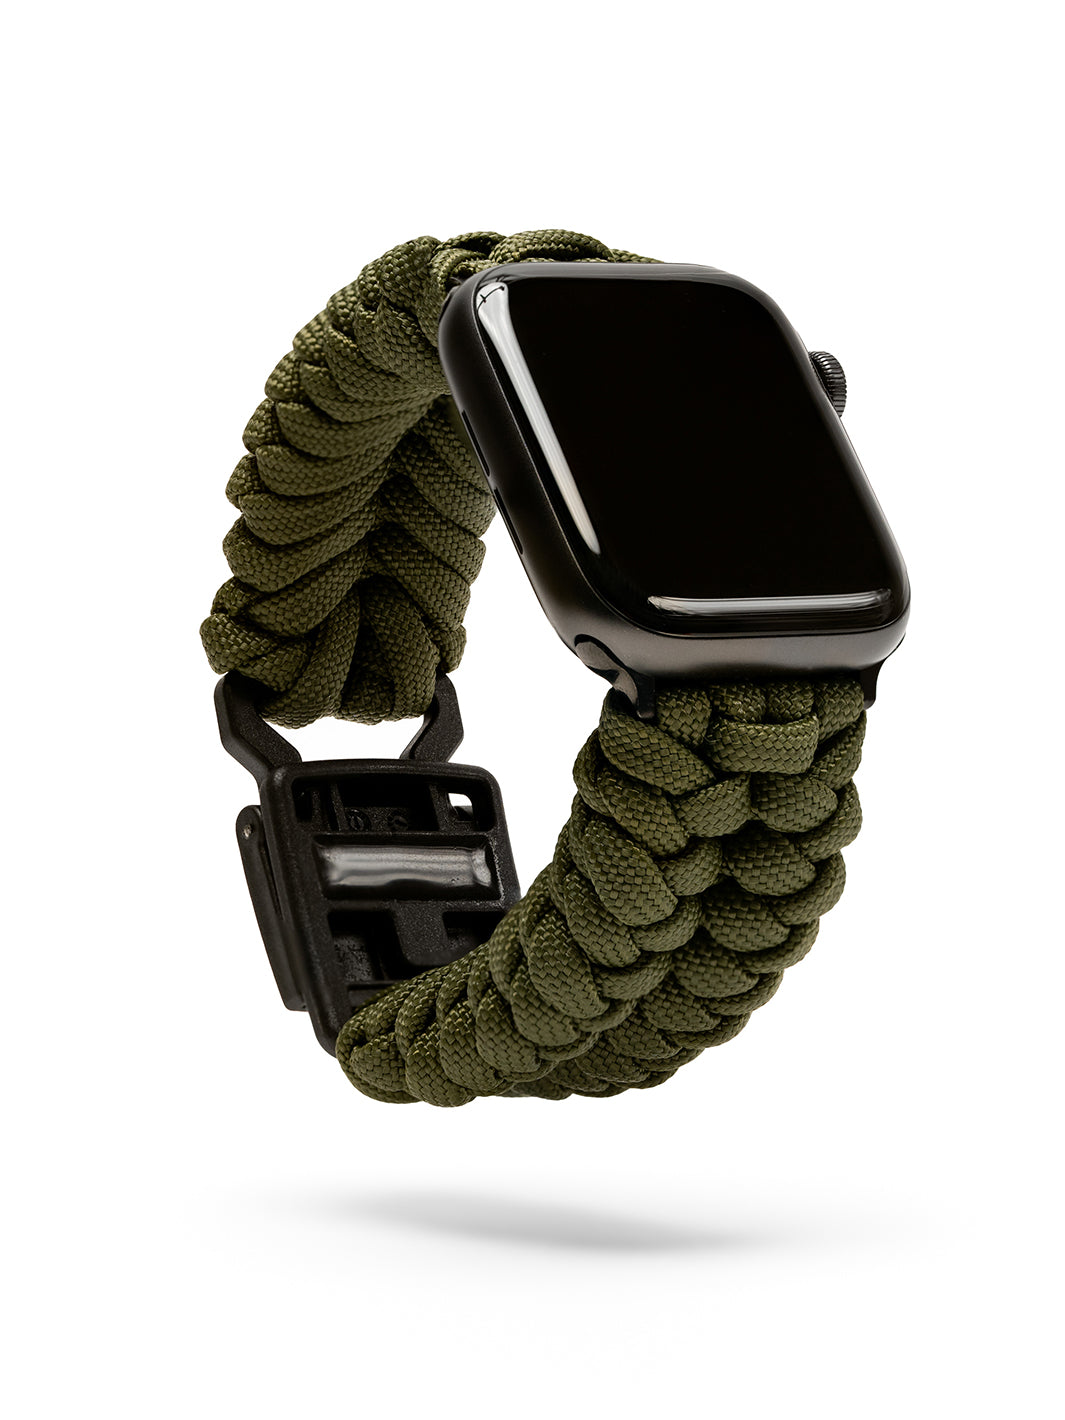 Apple Watch - Olive Drab